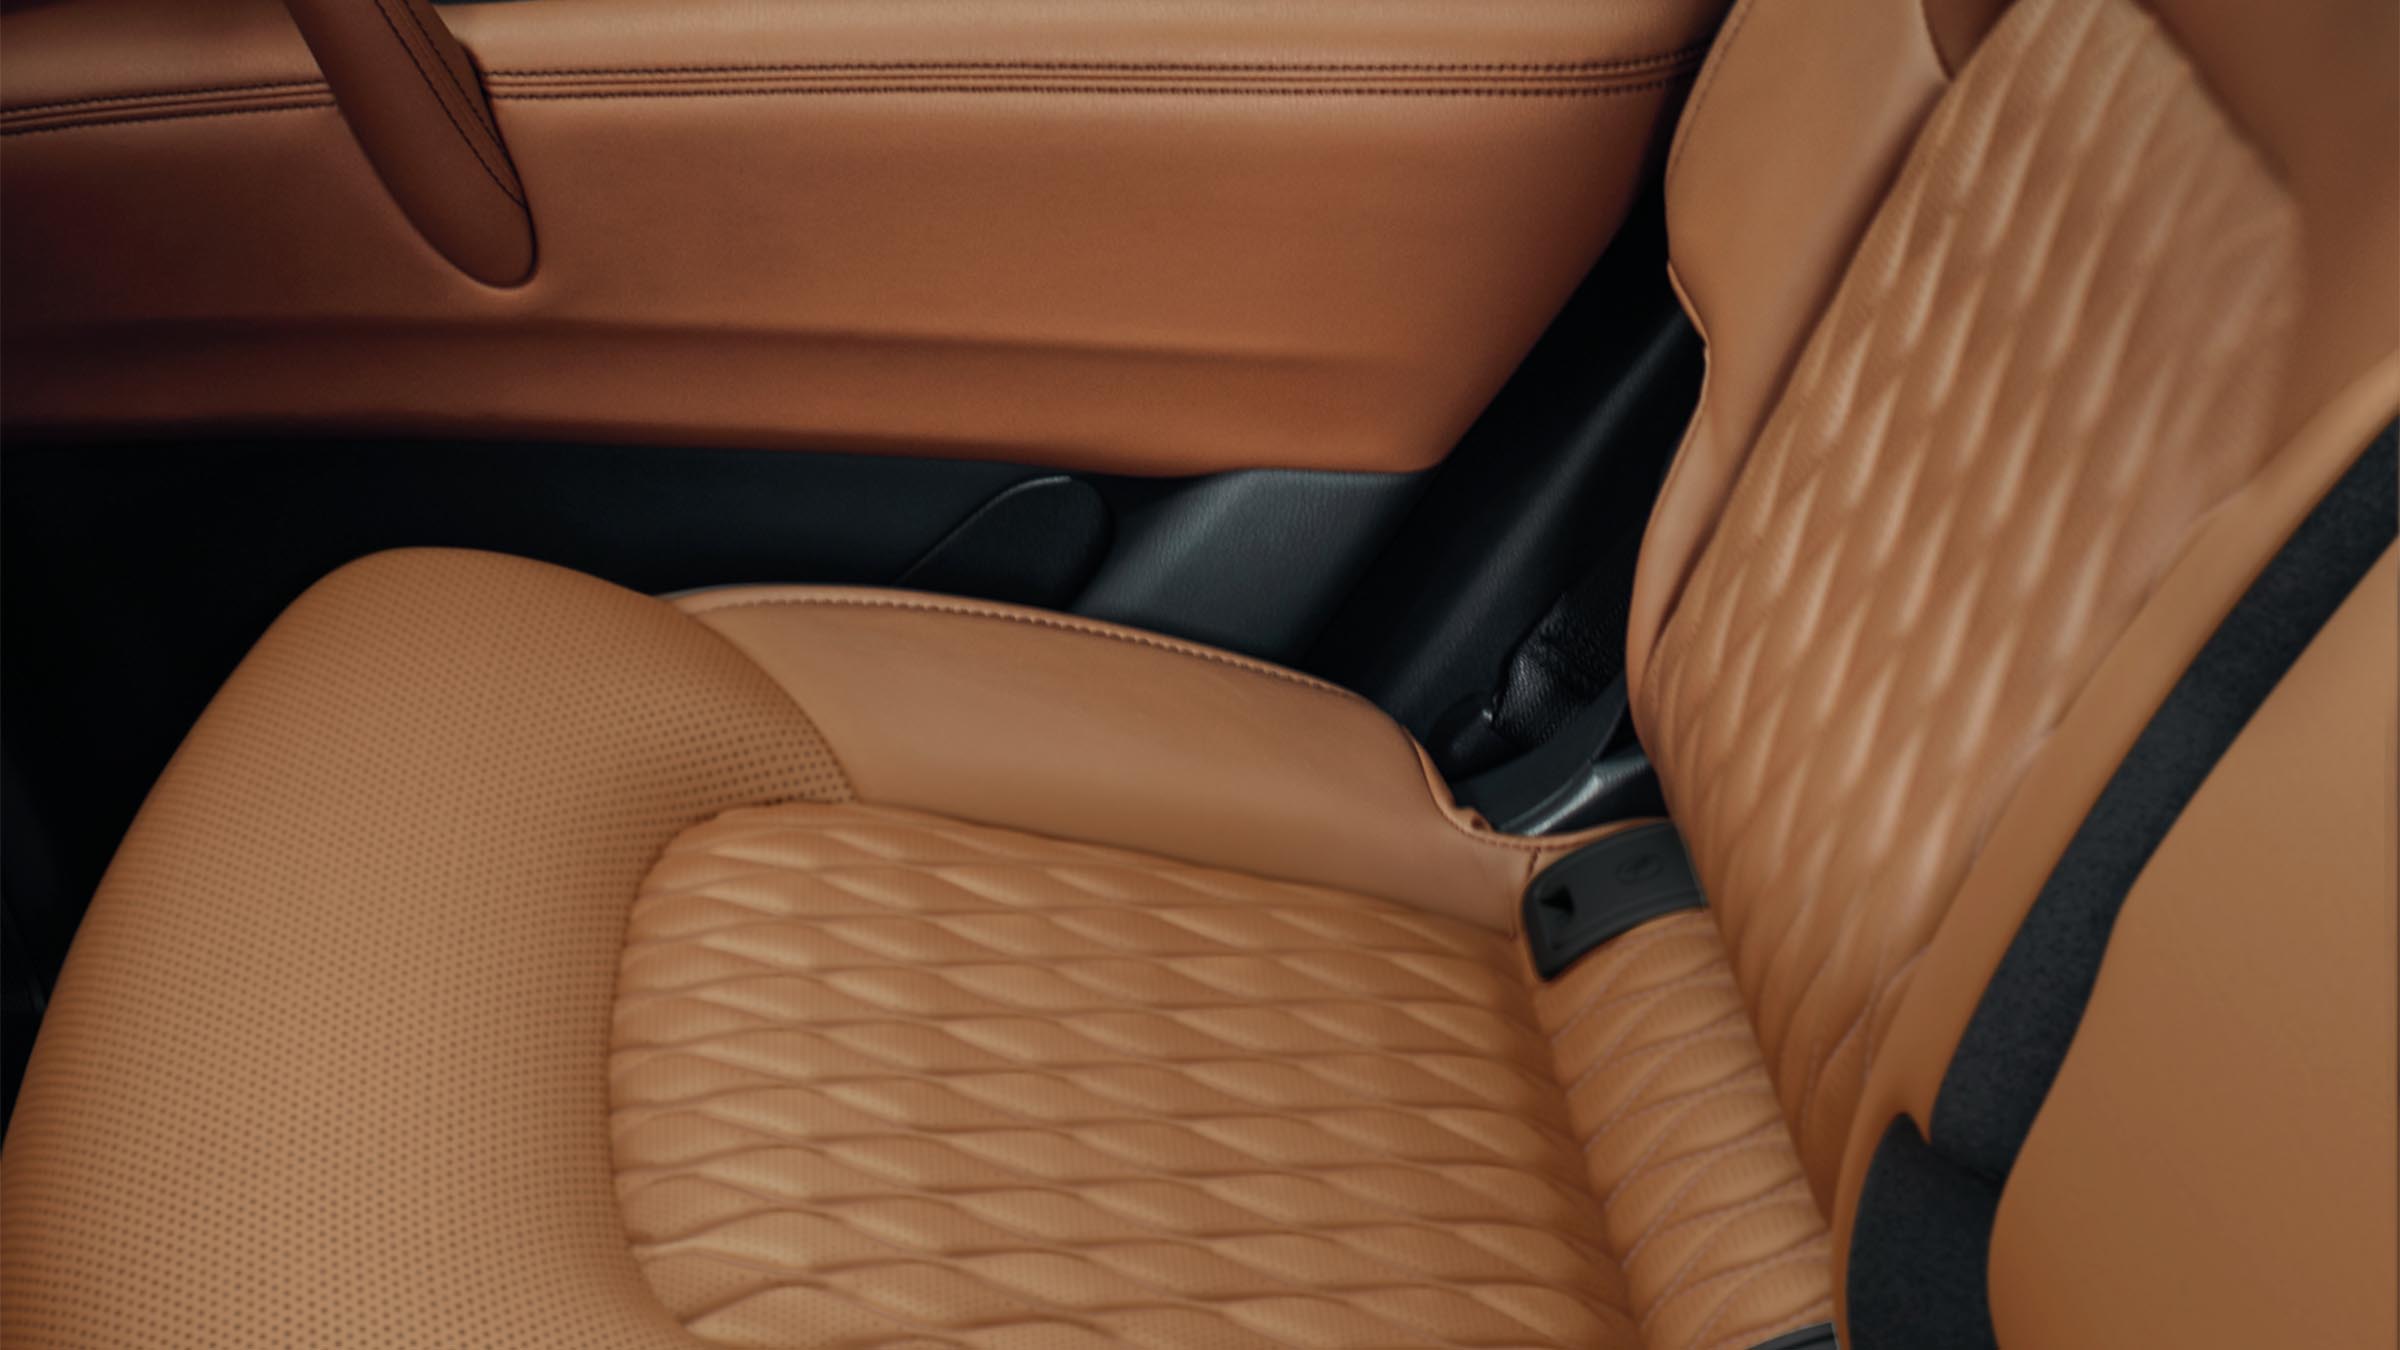 Close-up of 2022 INFINITI QX80 SUV leather seats.